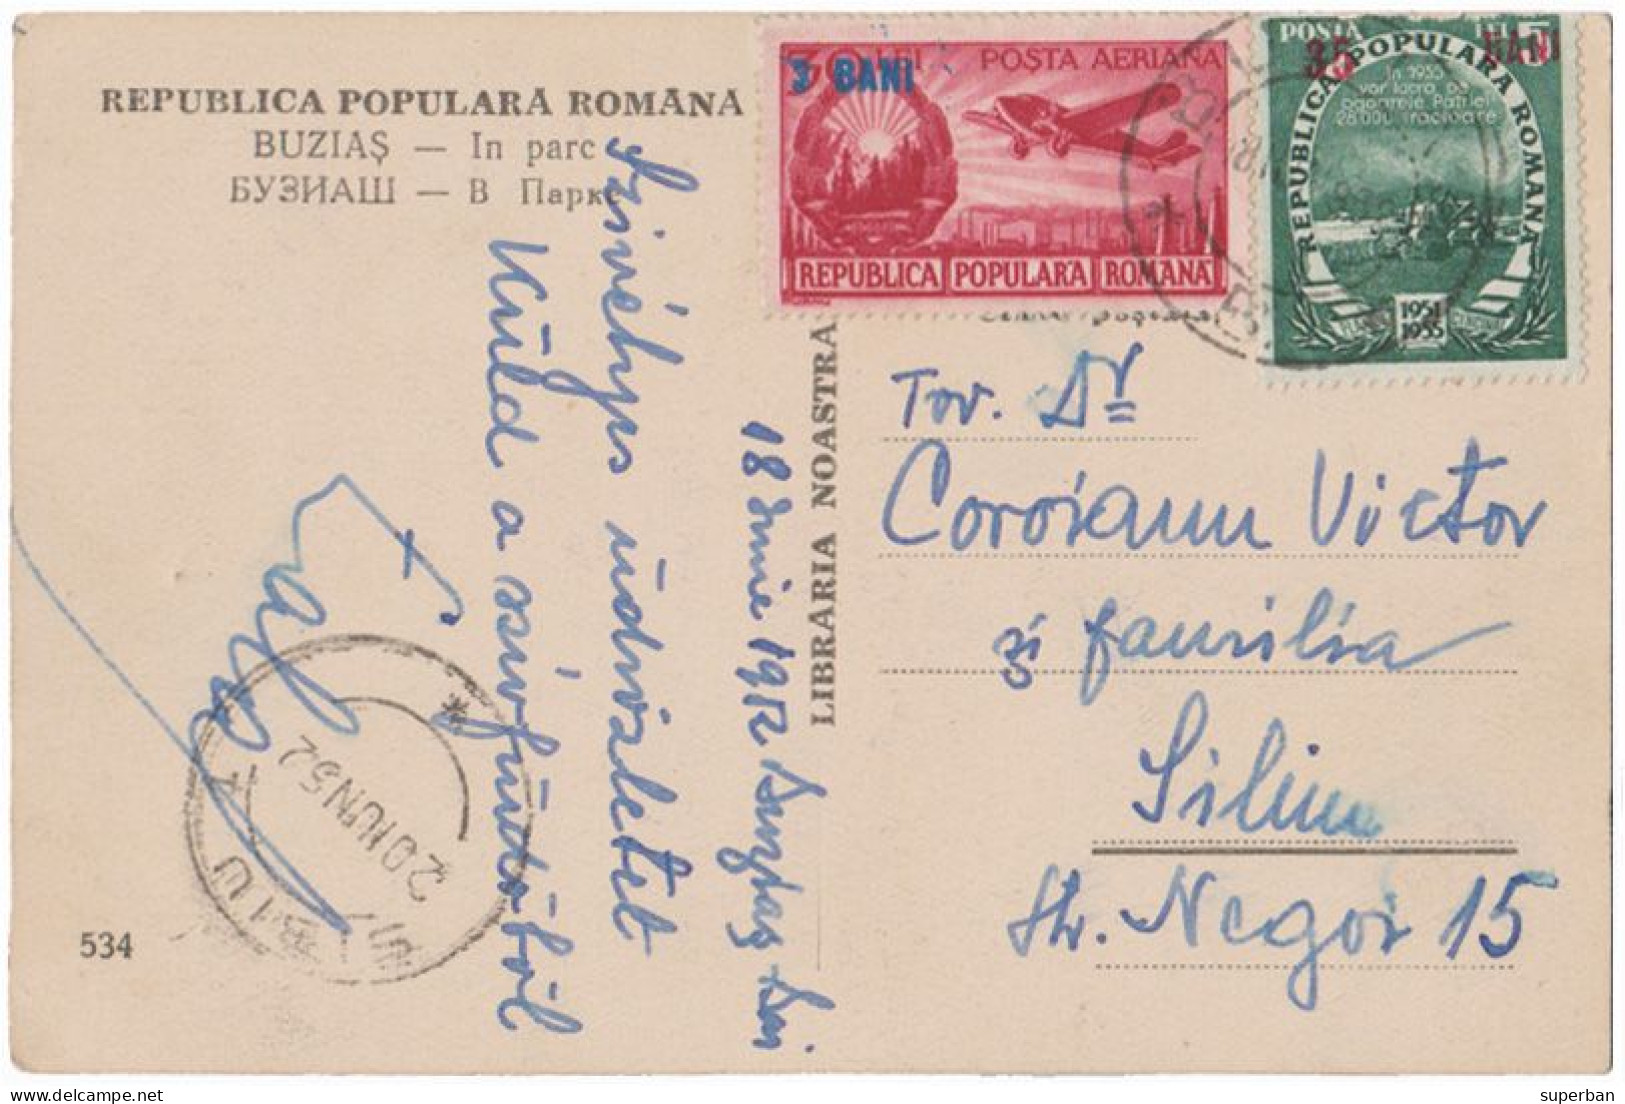 ROMANIA : 1952 - STABILIZAREA MONETARA / MONETARY STABILIZATION - POSTCARD MAILED With OVERPRINTED STAMPS - RRR (an319) - Storia Postale